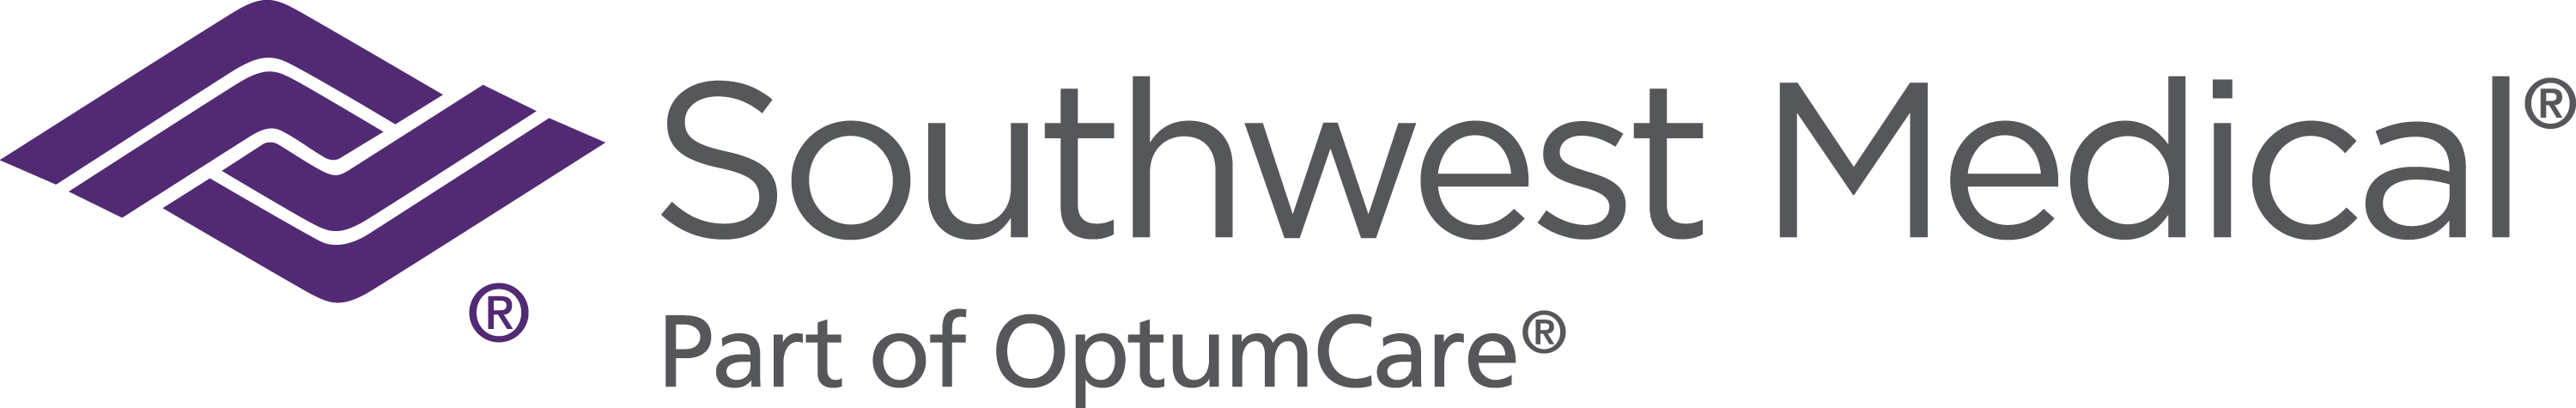 Southwest Medical Associates logo